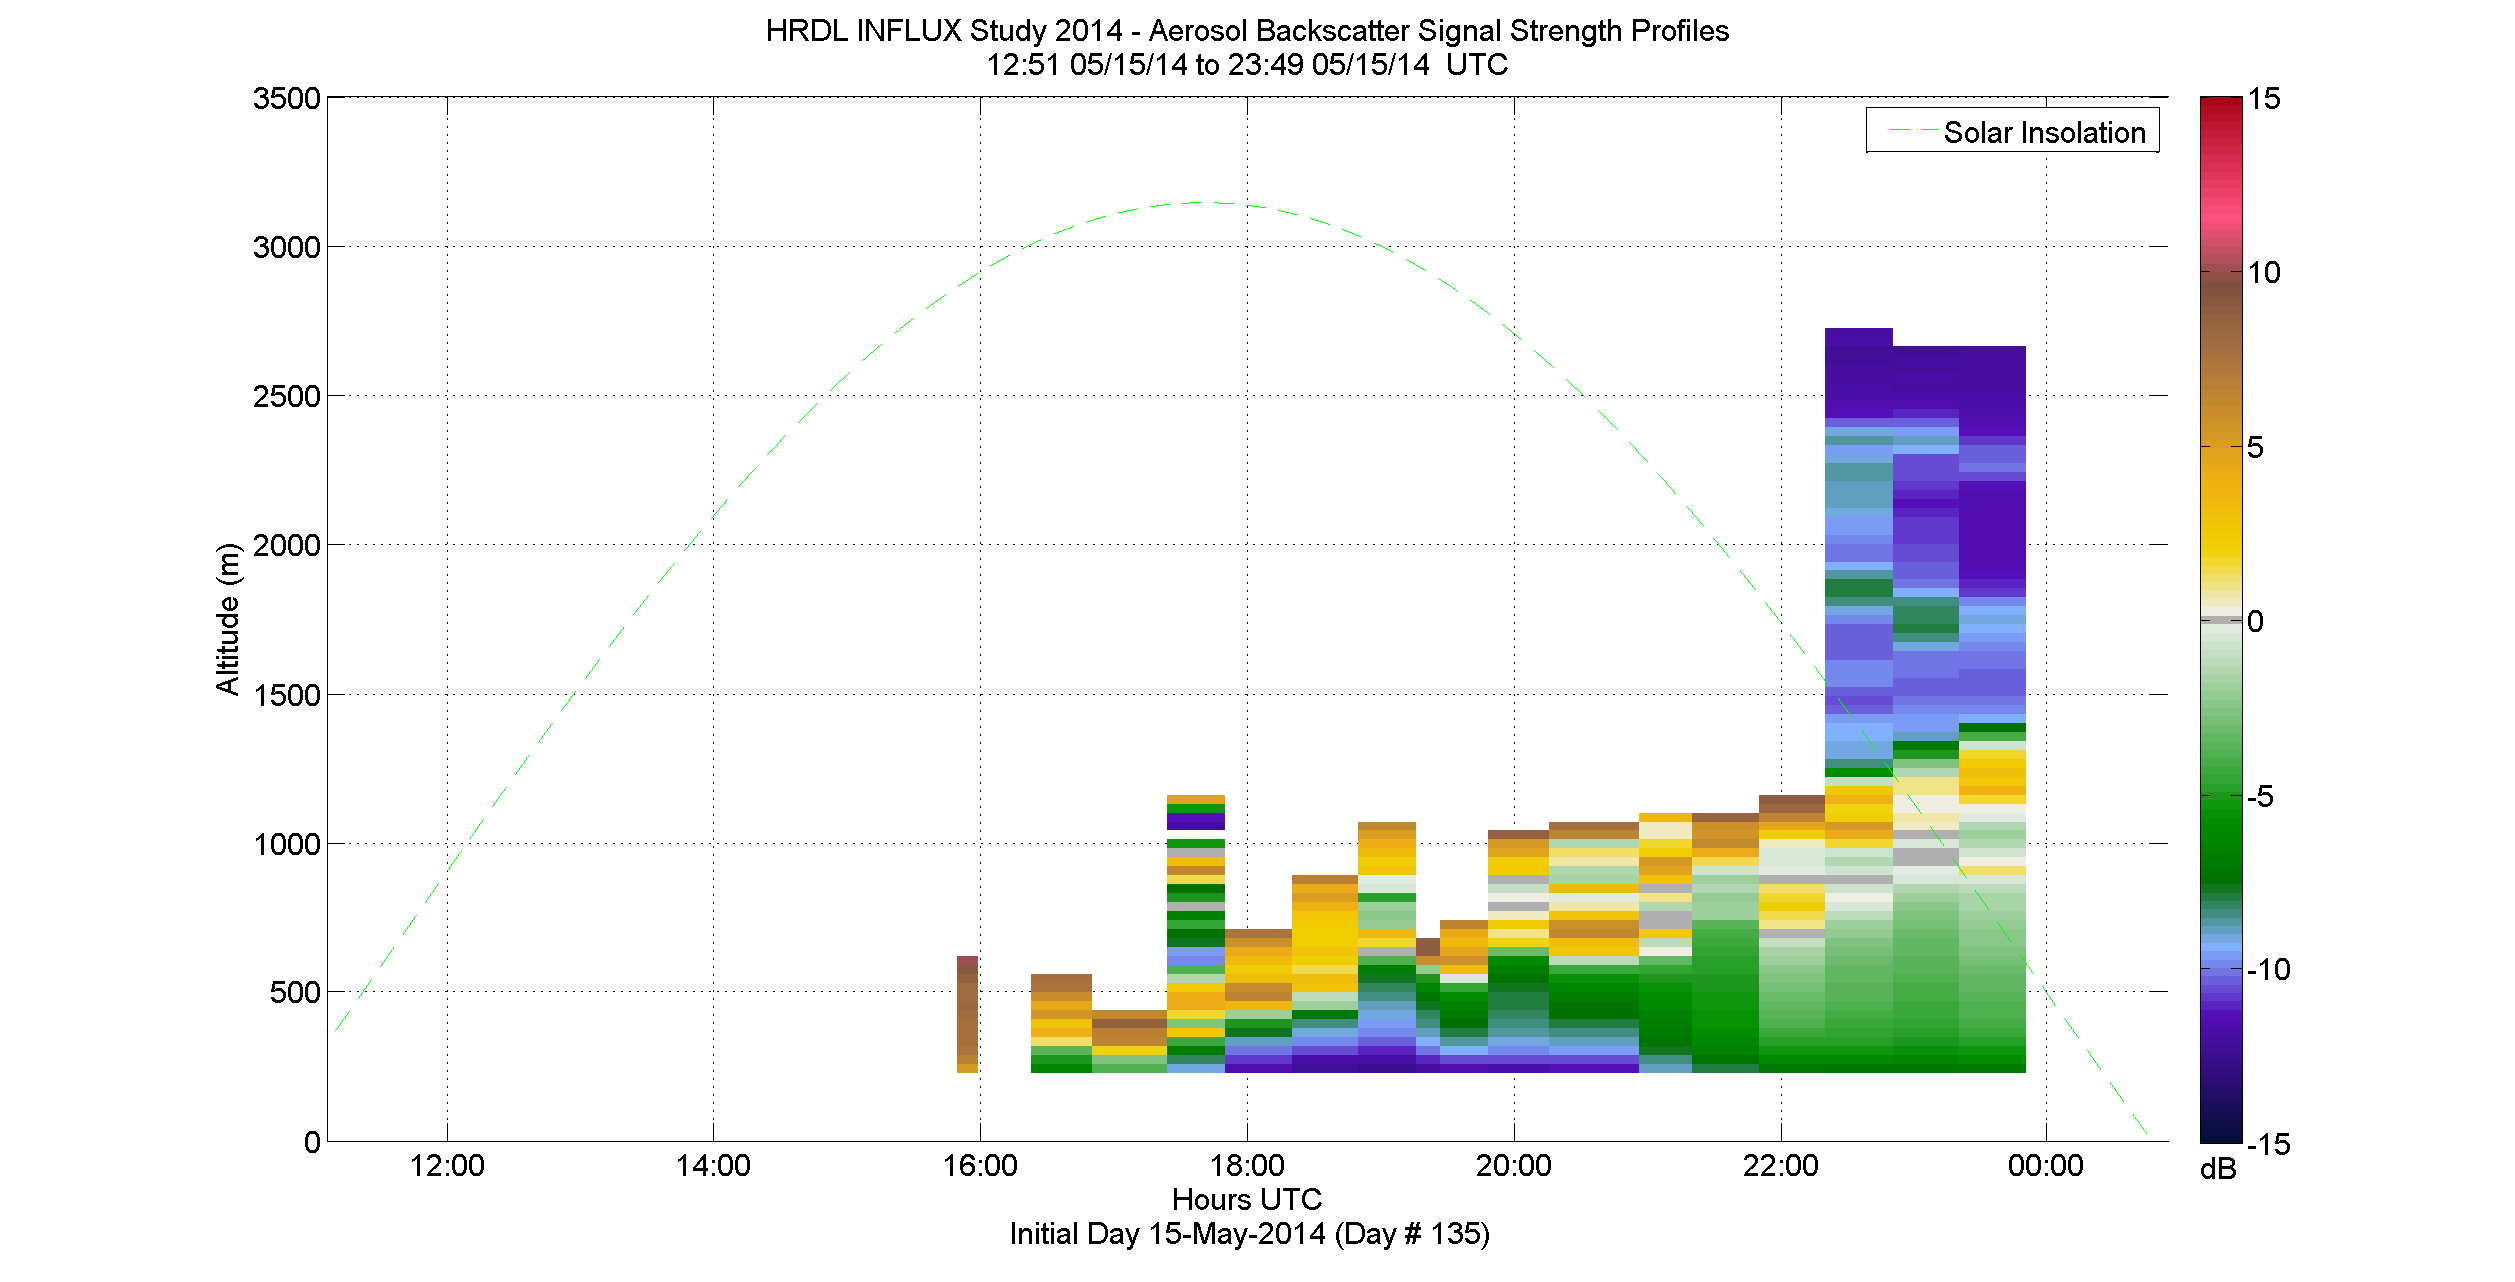 HRDL aerosol backscatter signal strength profile - May 15 pm